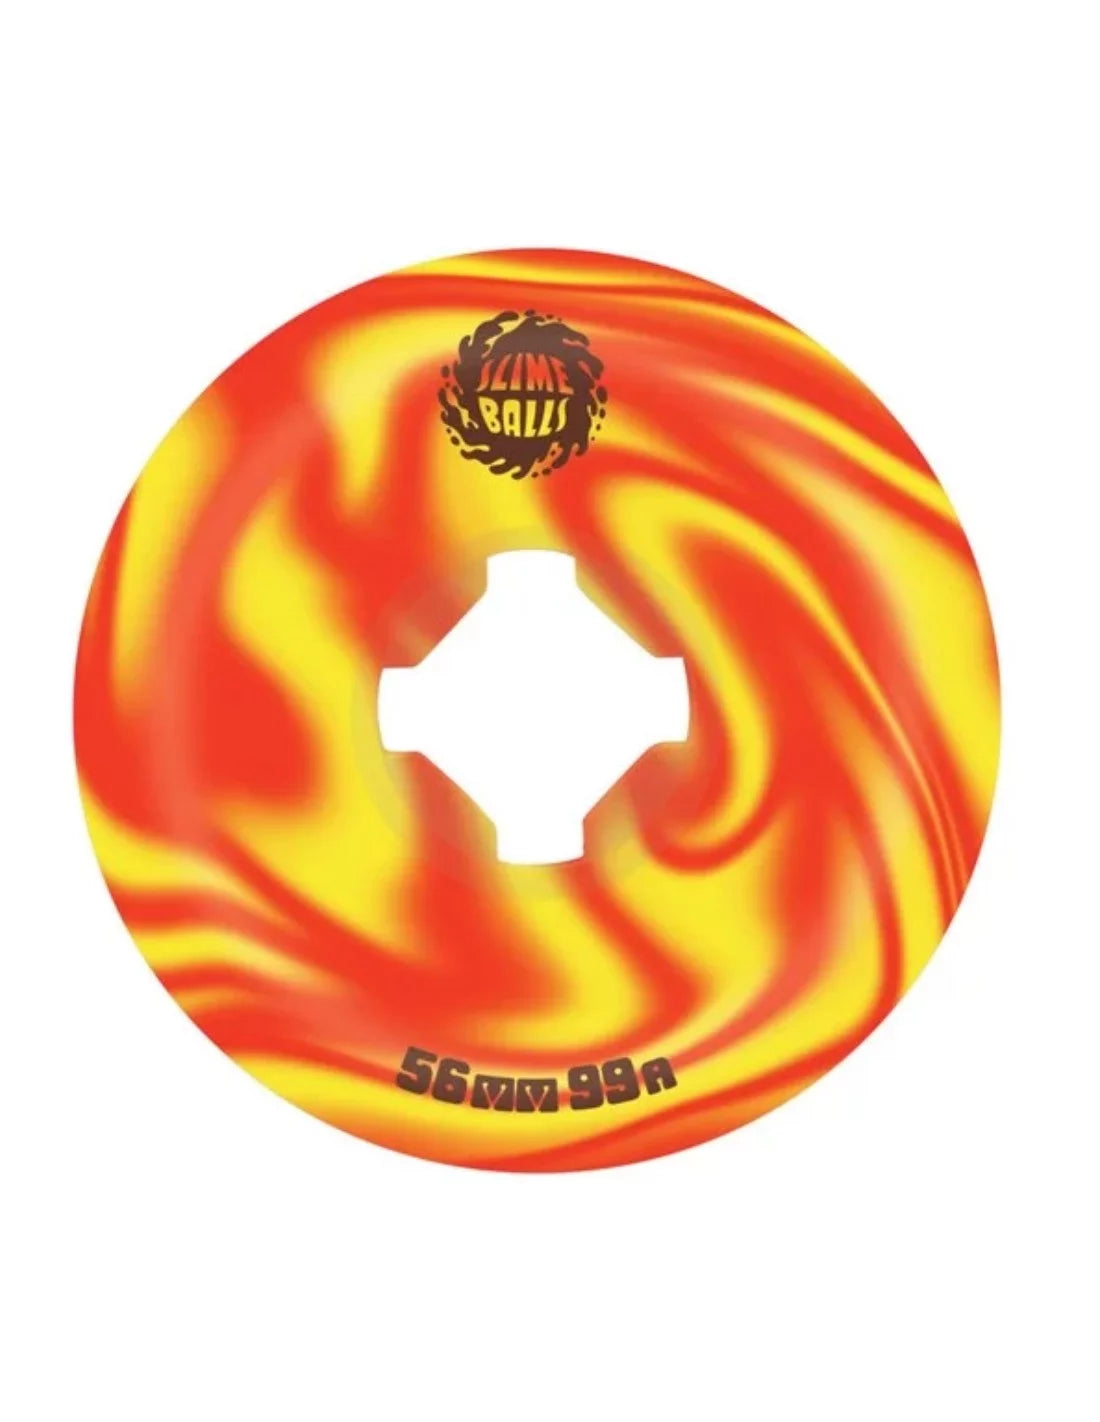 Slime Balls Jeremy Fish Burger Wheels (Red/Yellow Swirl) 99a